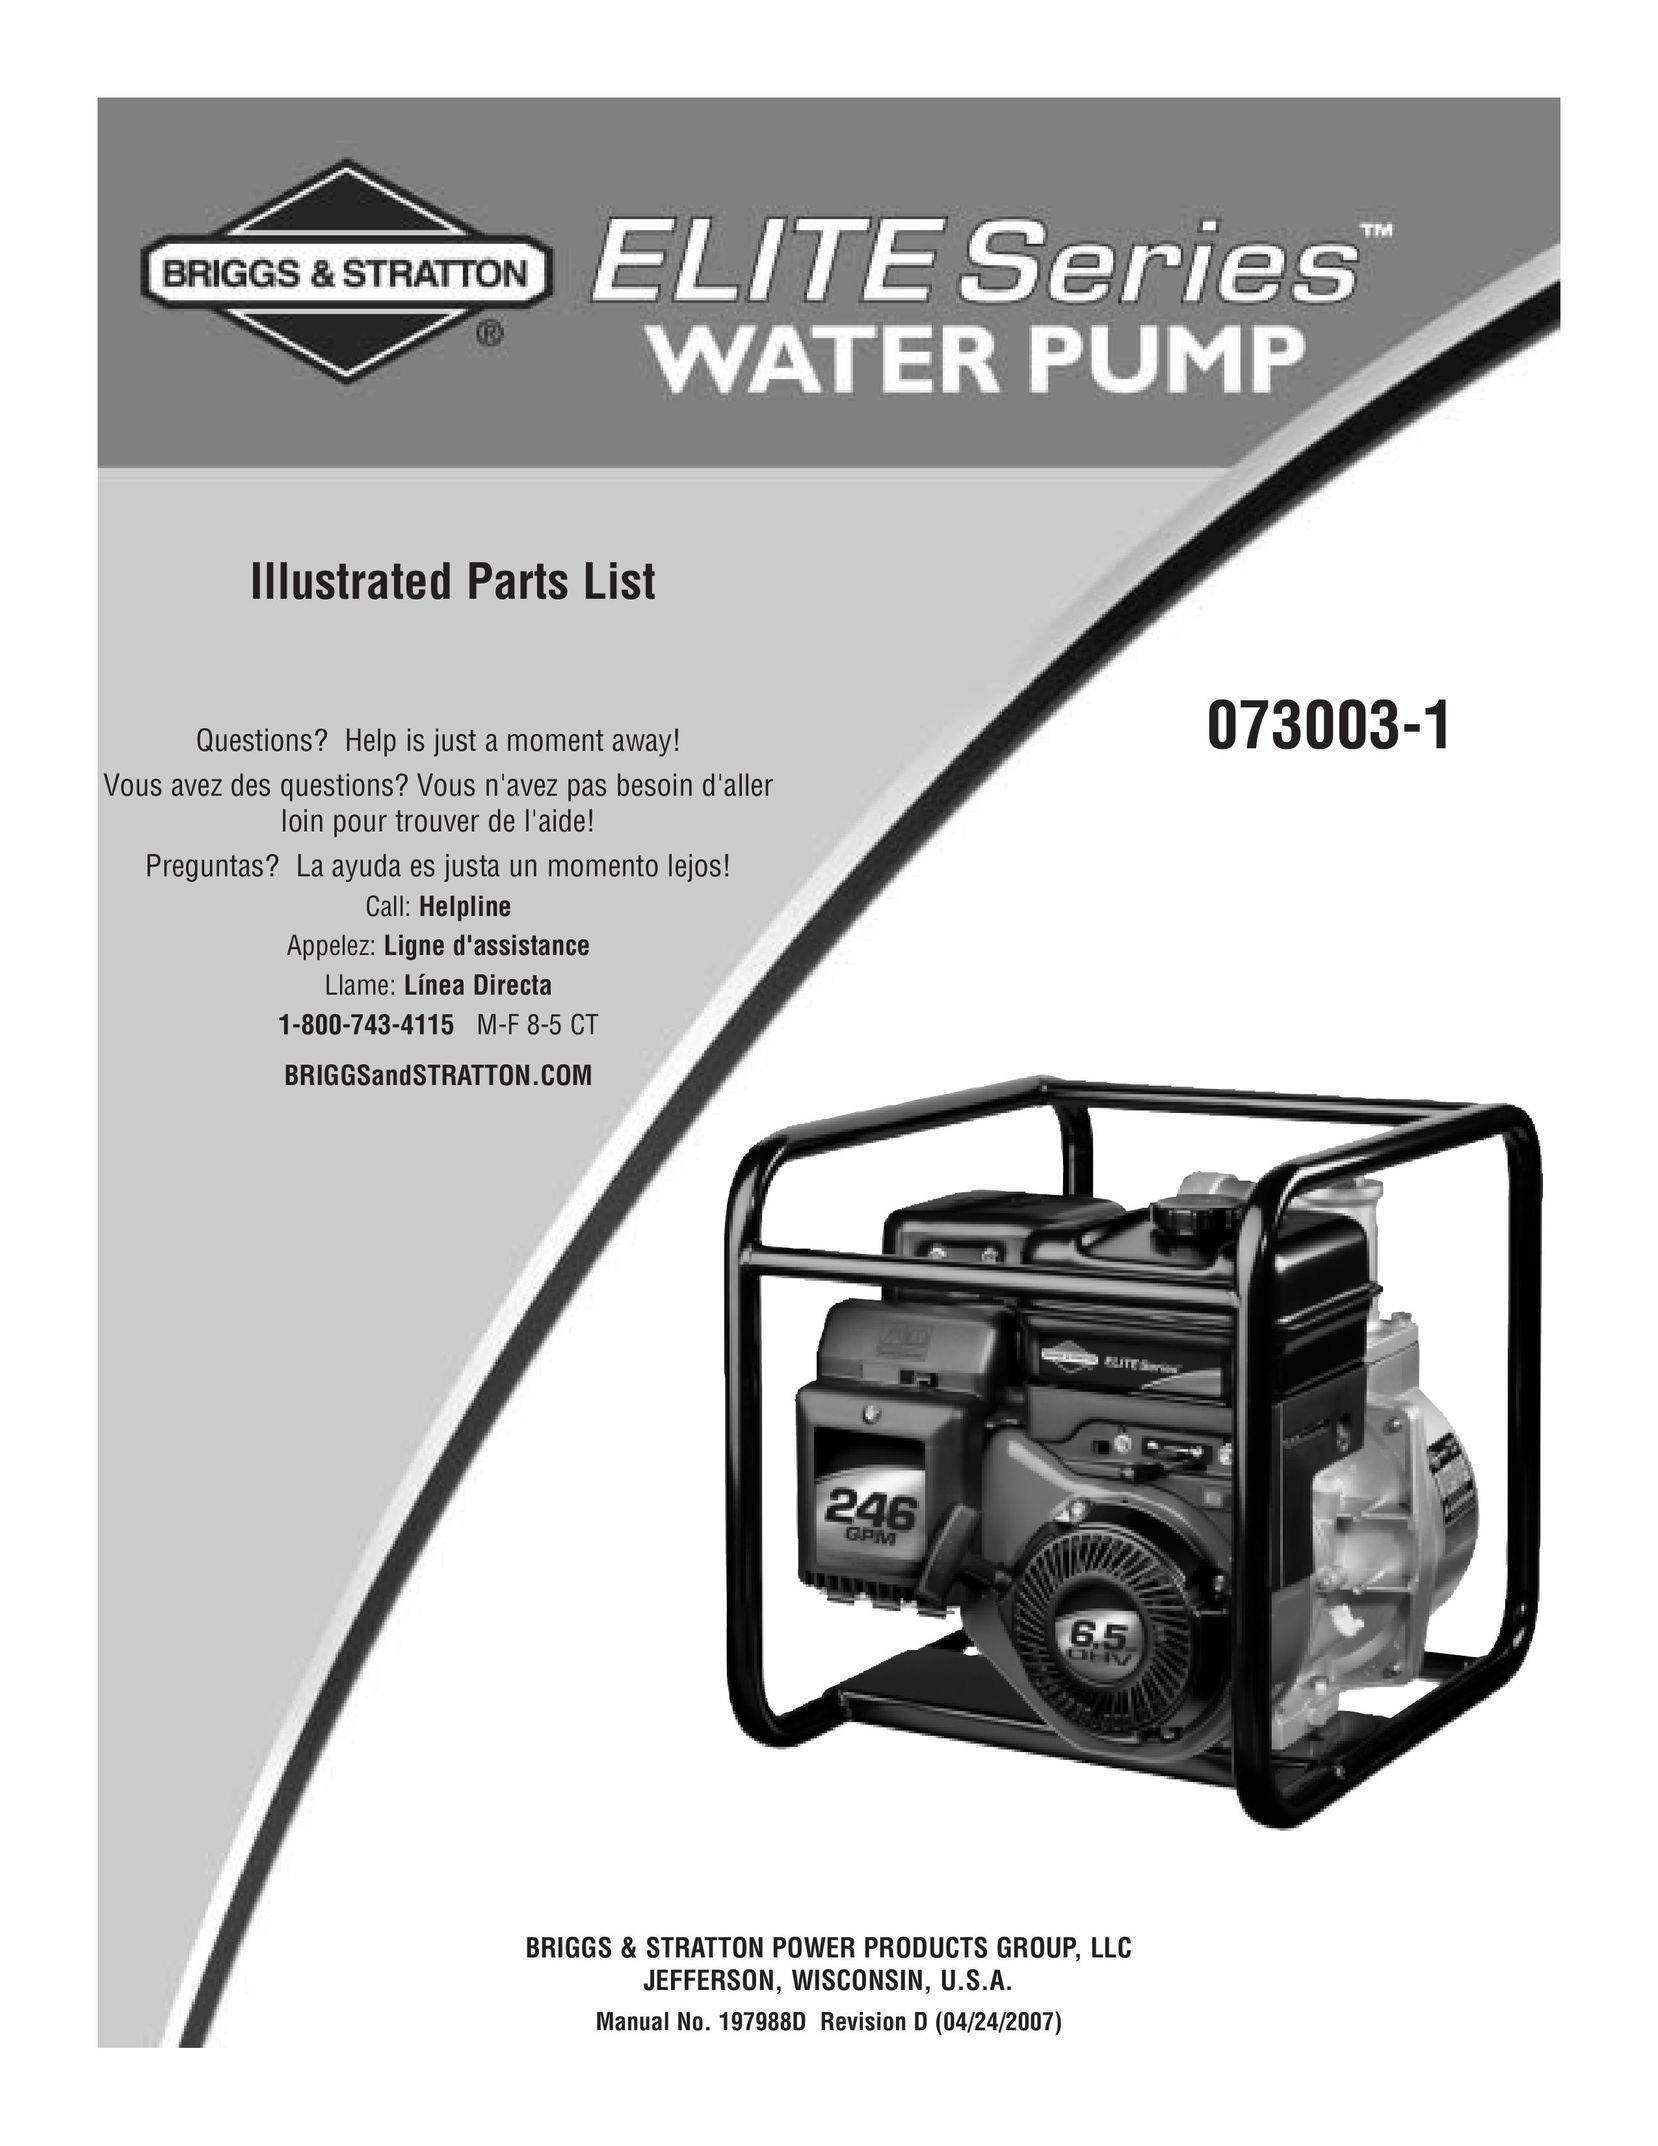 Briggs & Stratton 073003-1 Plumbing Product User Manual